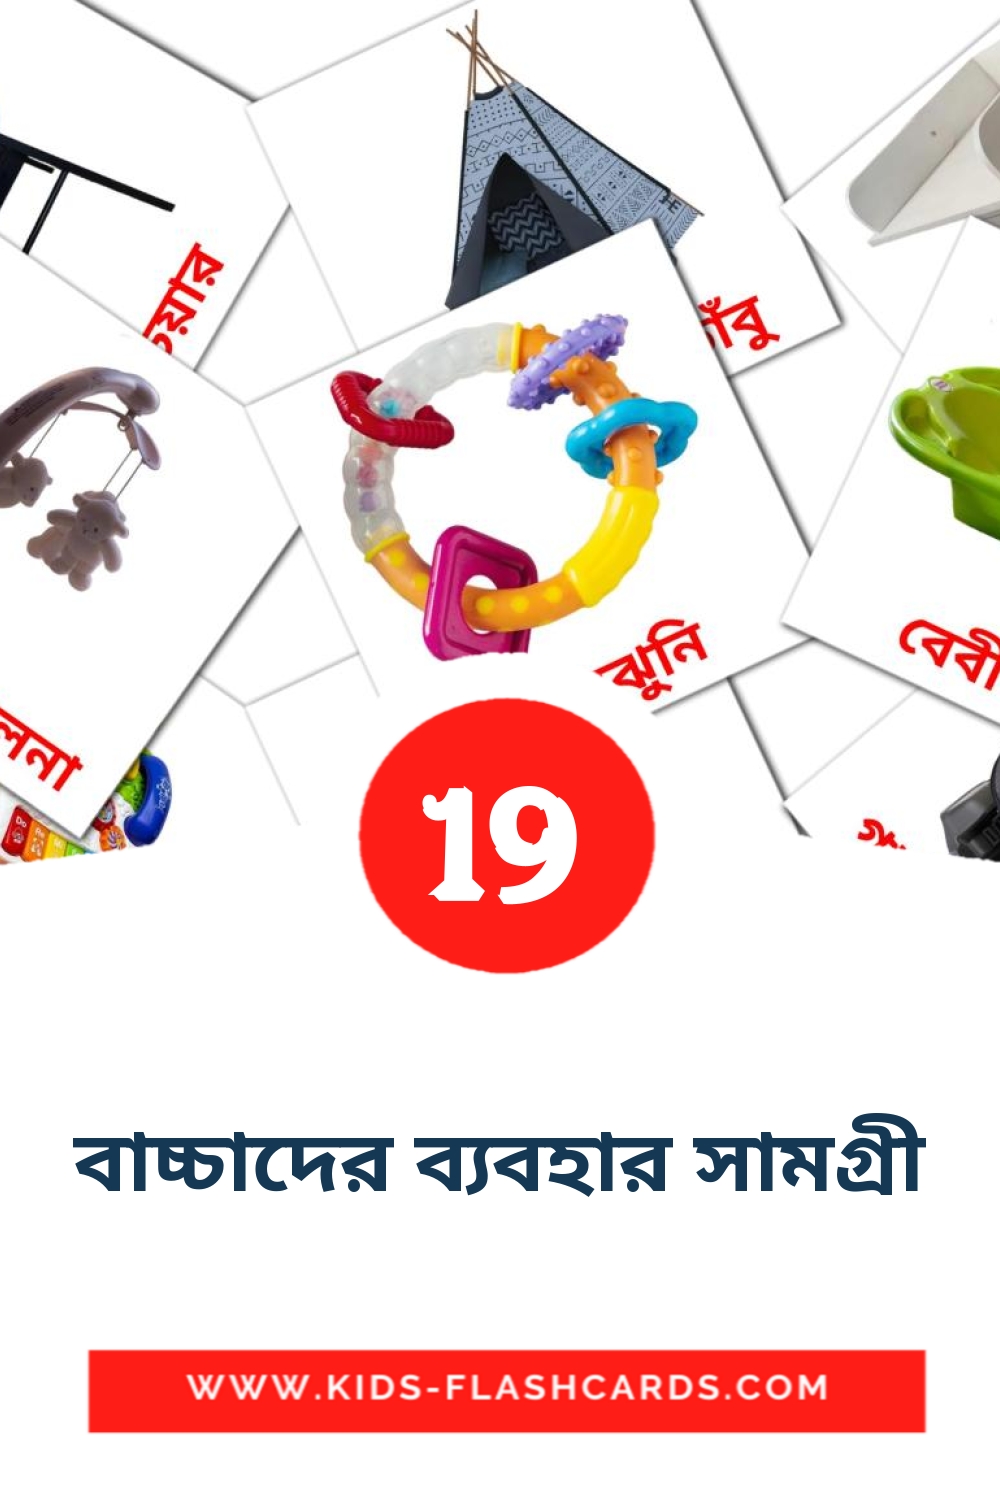 19 carte illustrate di বাচ্চাদের ব্যবহার সামগ্রী per la scuola materna in bengalese